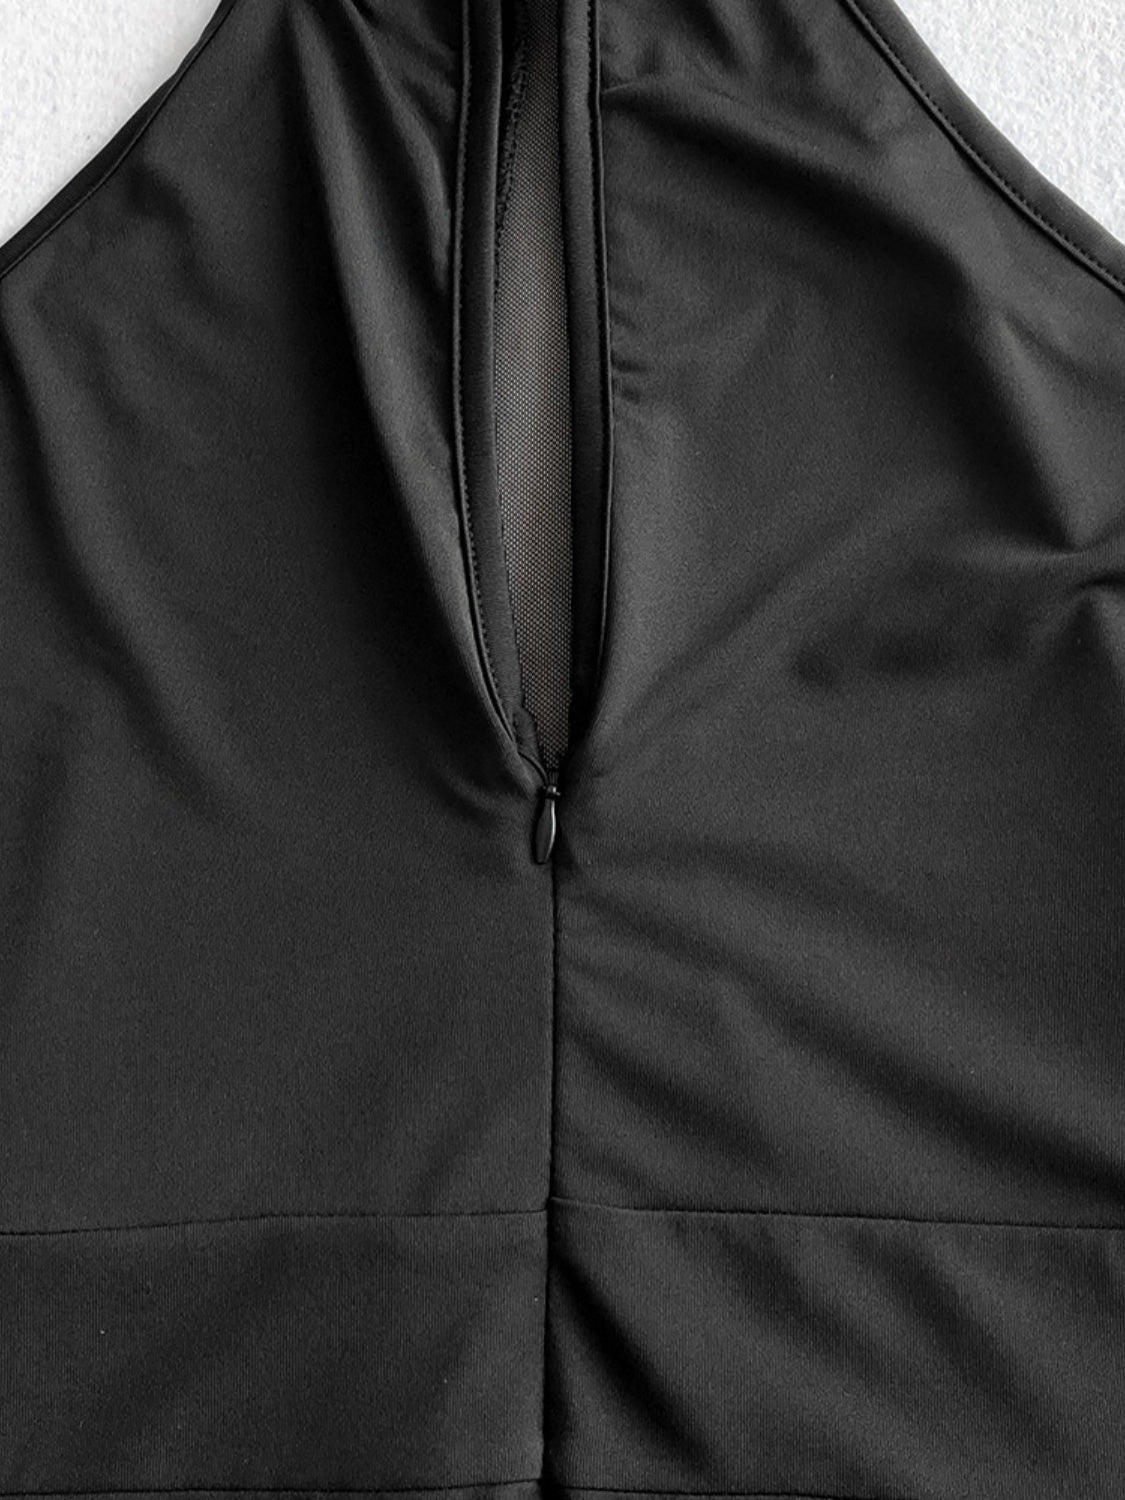 Cutout Grecian Neck Dress - Black